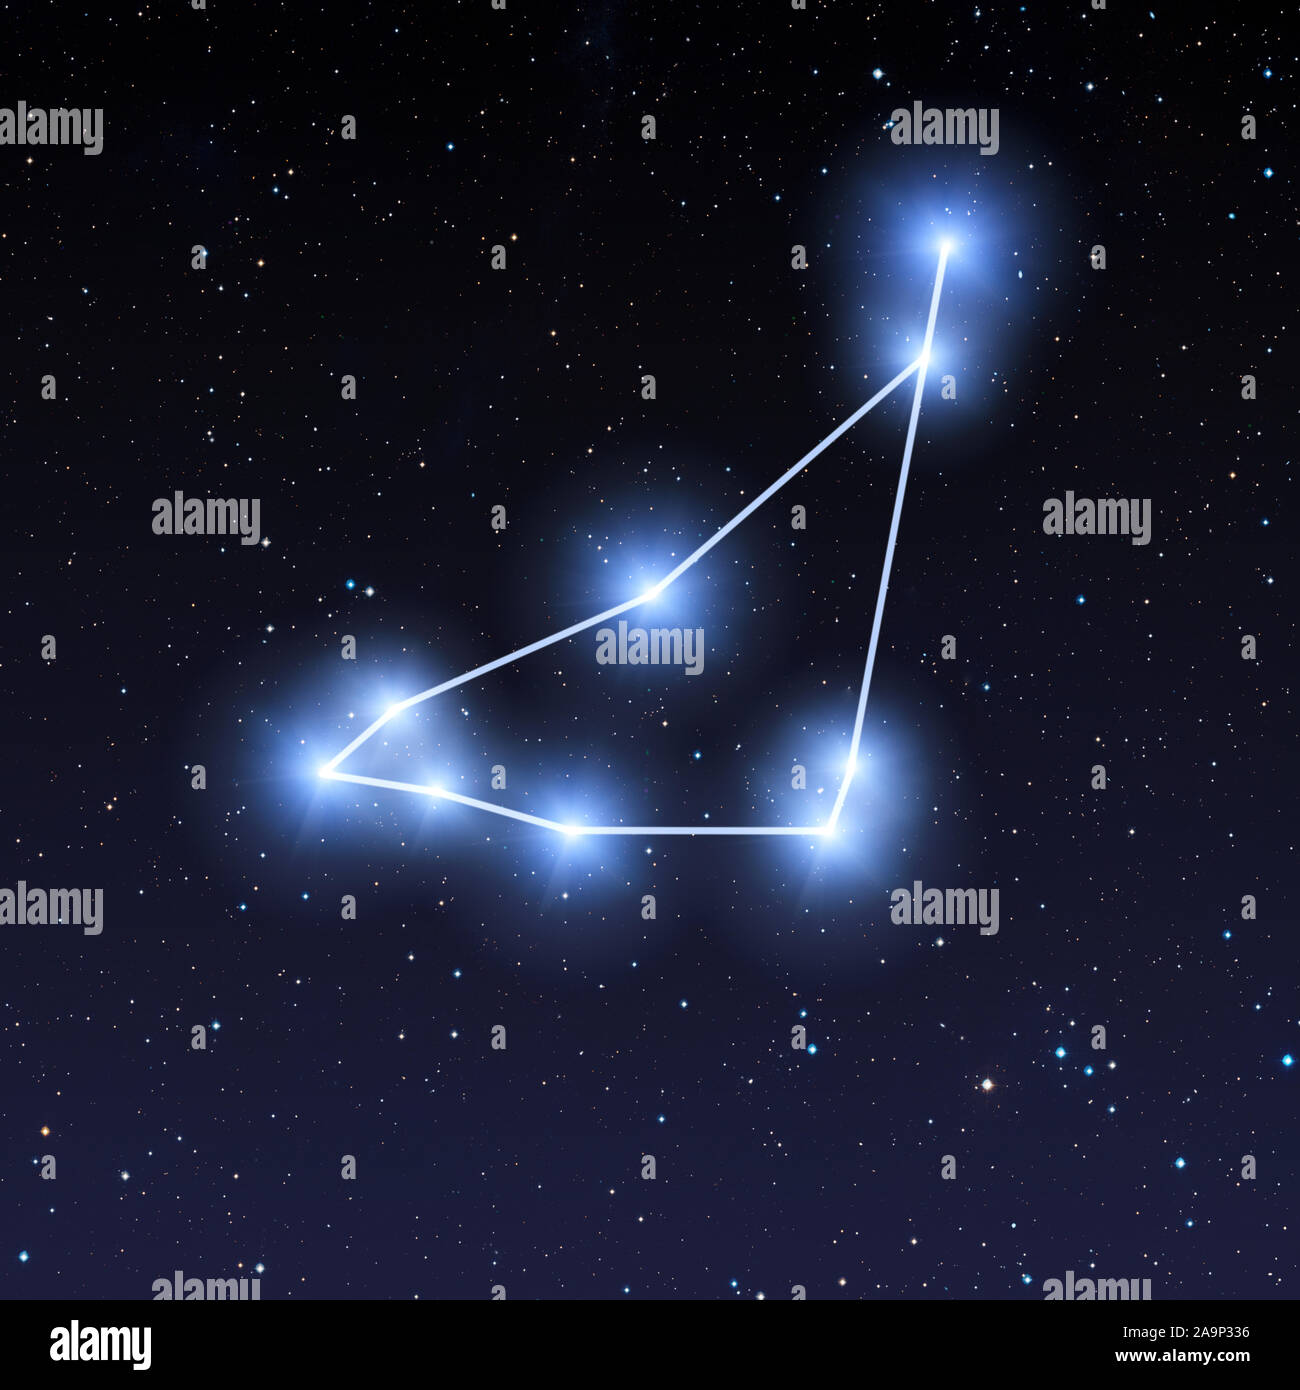 Capricorn constellation in night sky with bright blue stars Stock Photo